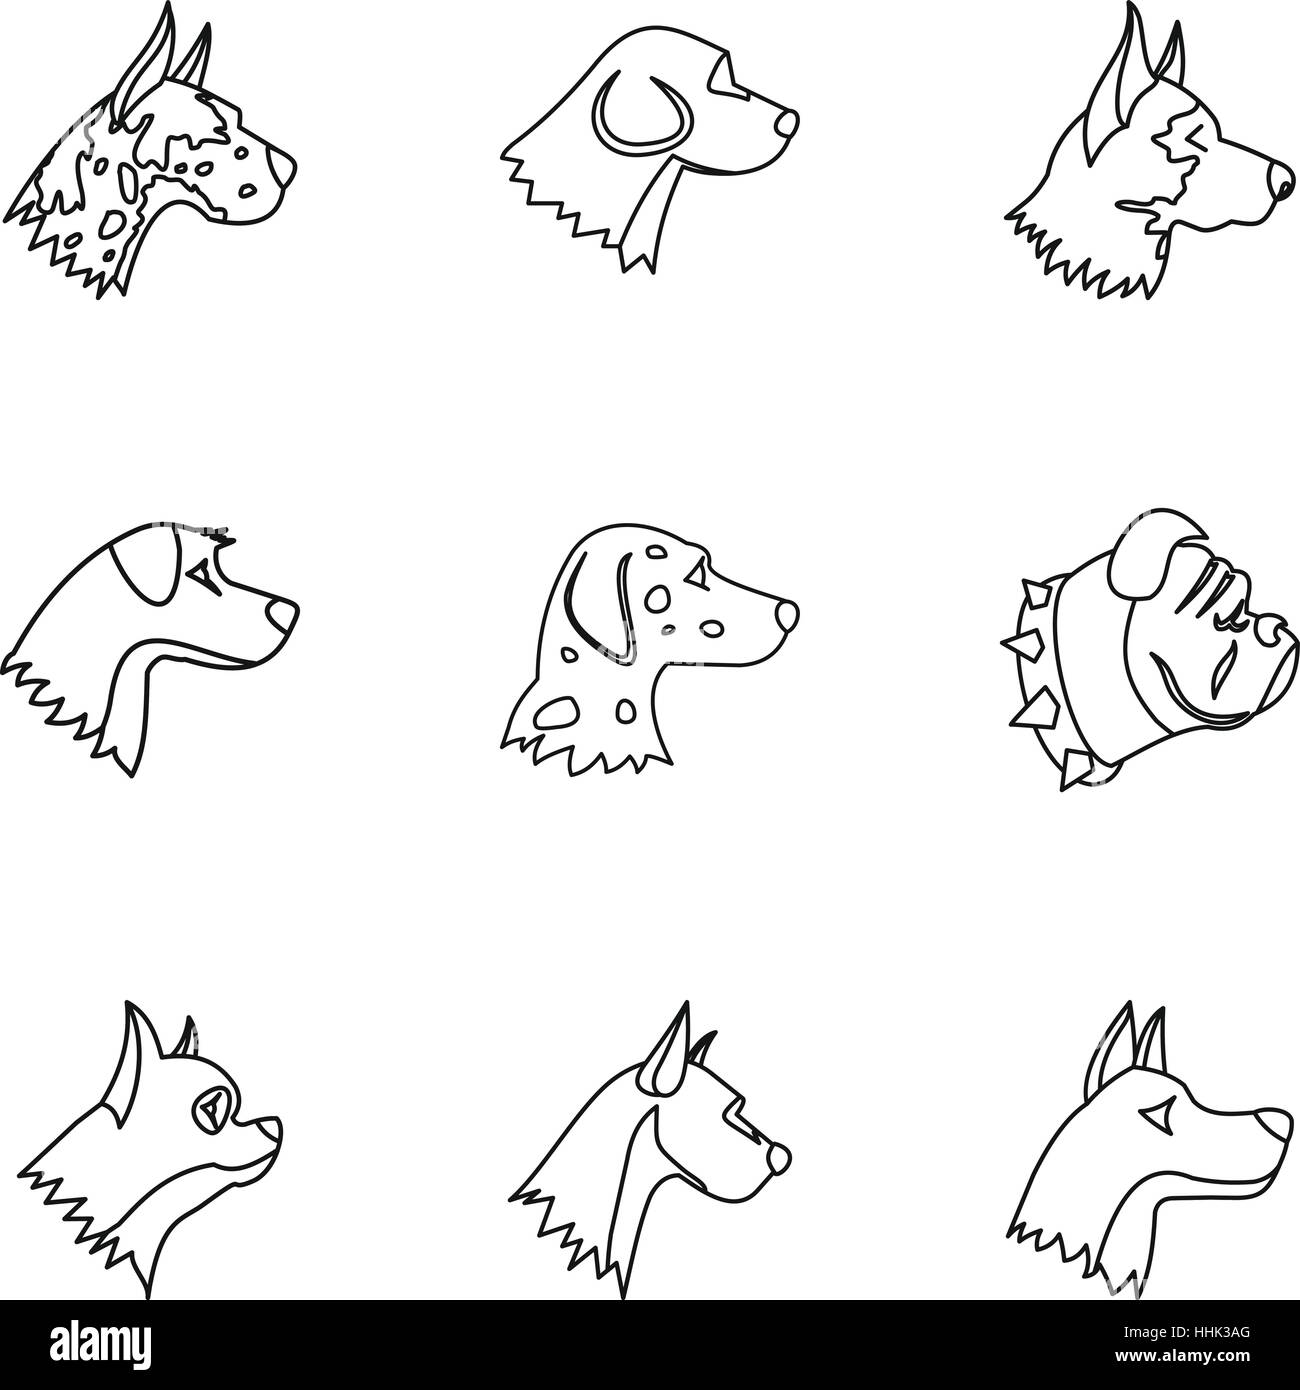 Faithful friend dog icons set, outline style Stock Vector